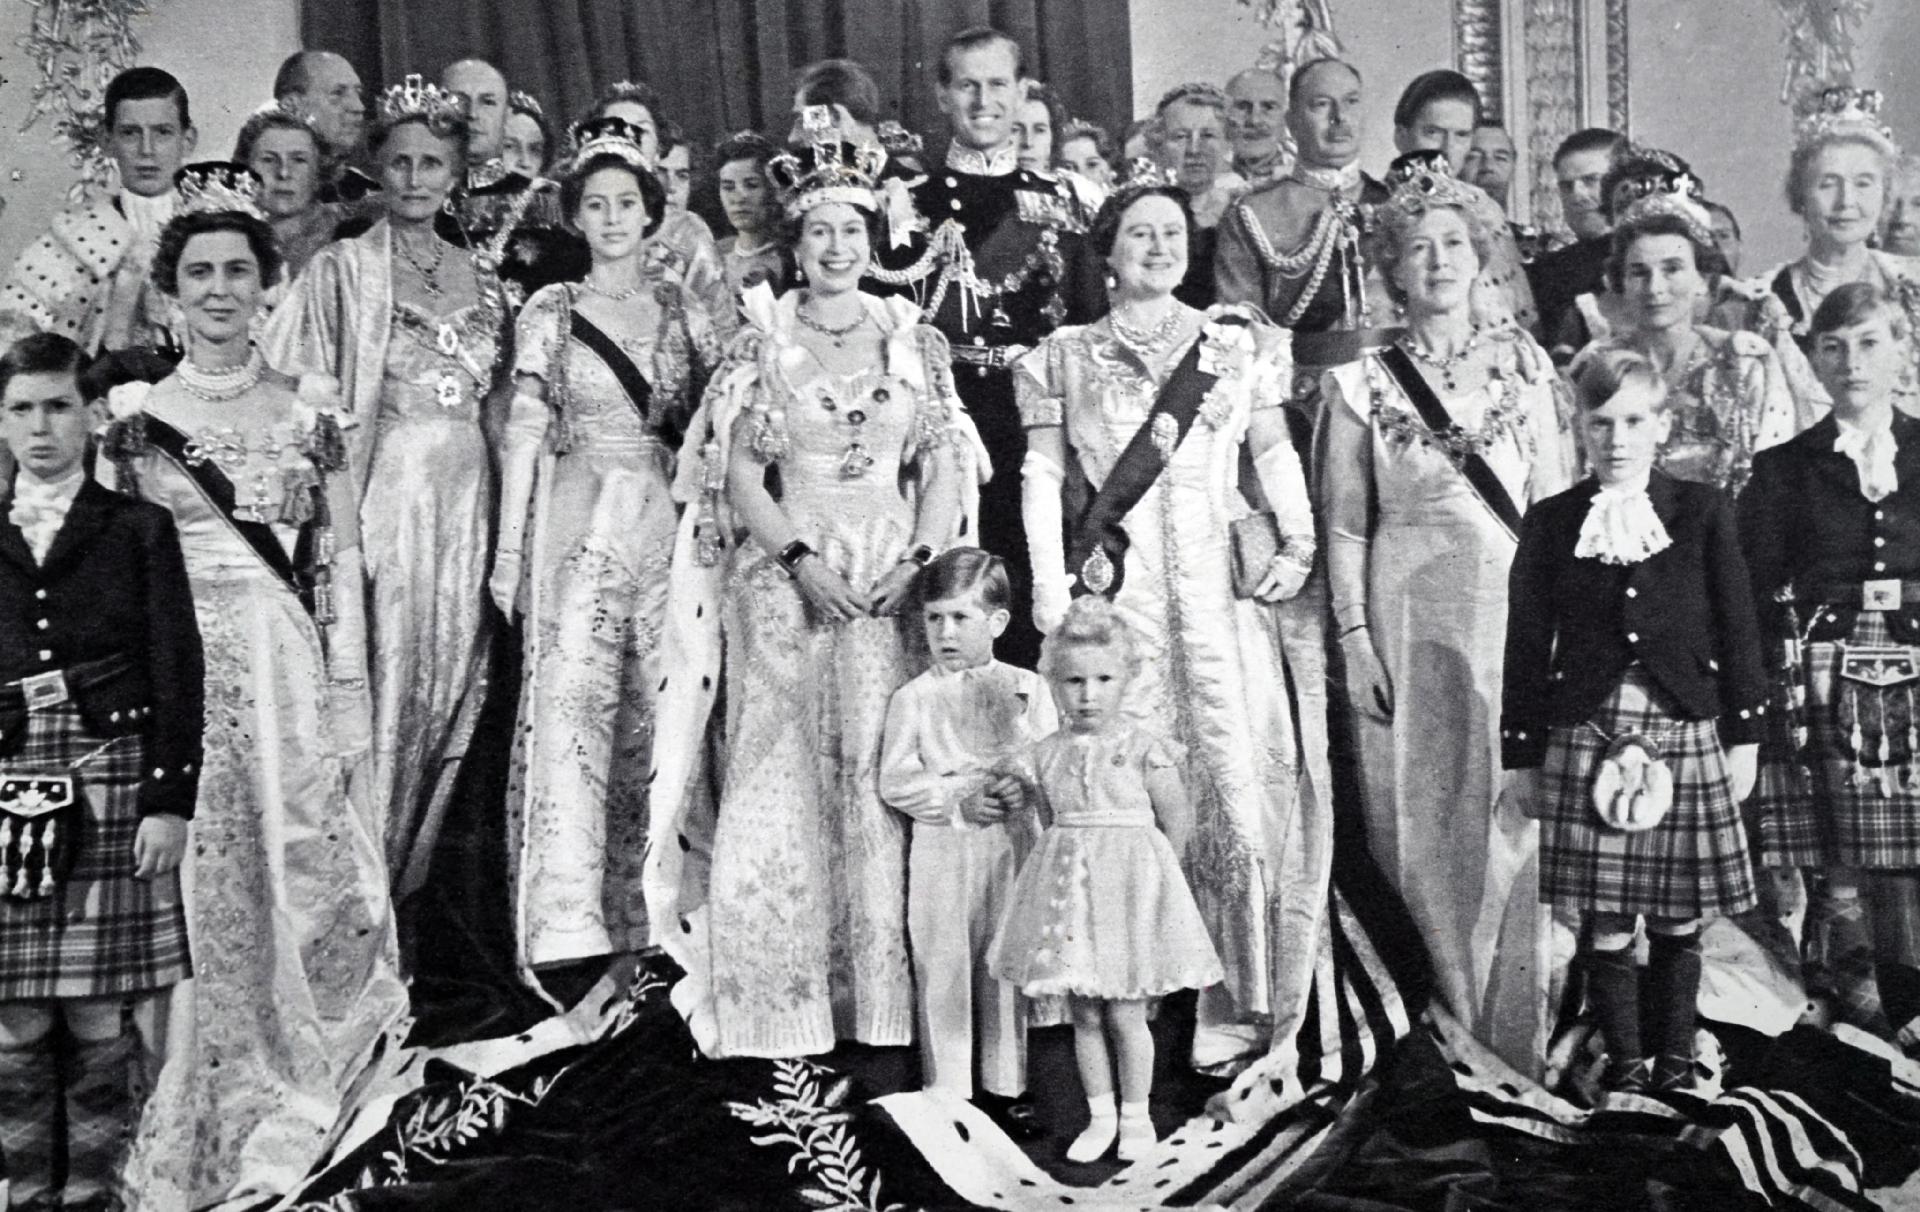 Queen Elizabeth II at her coronation on June 2, 1953 - Getty Images